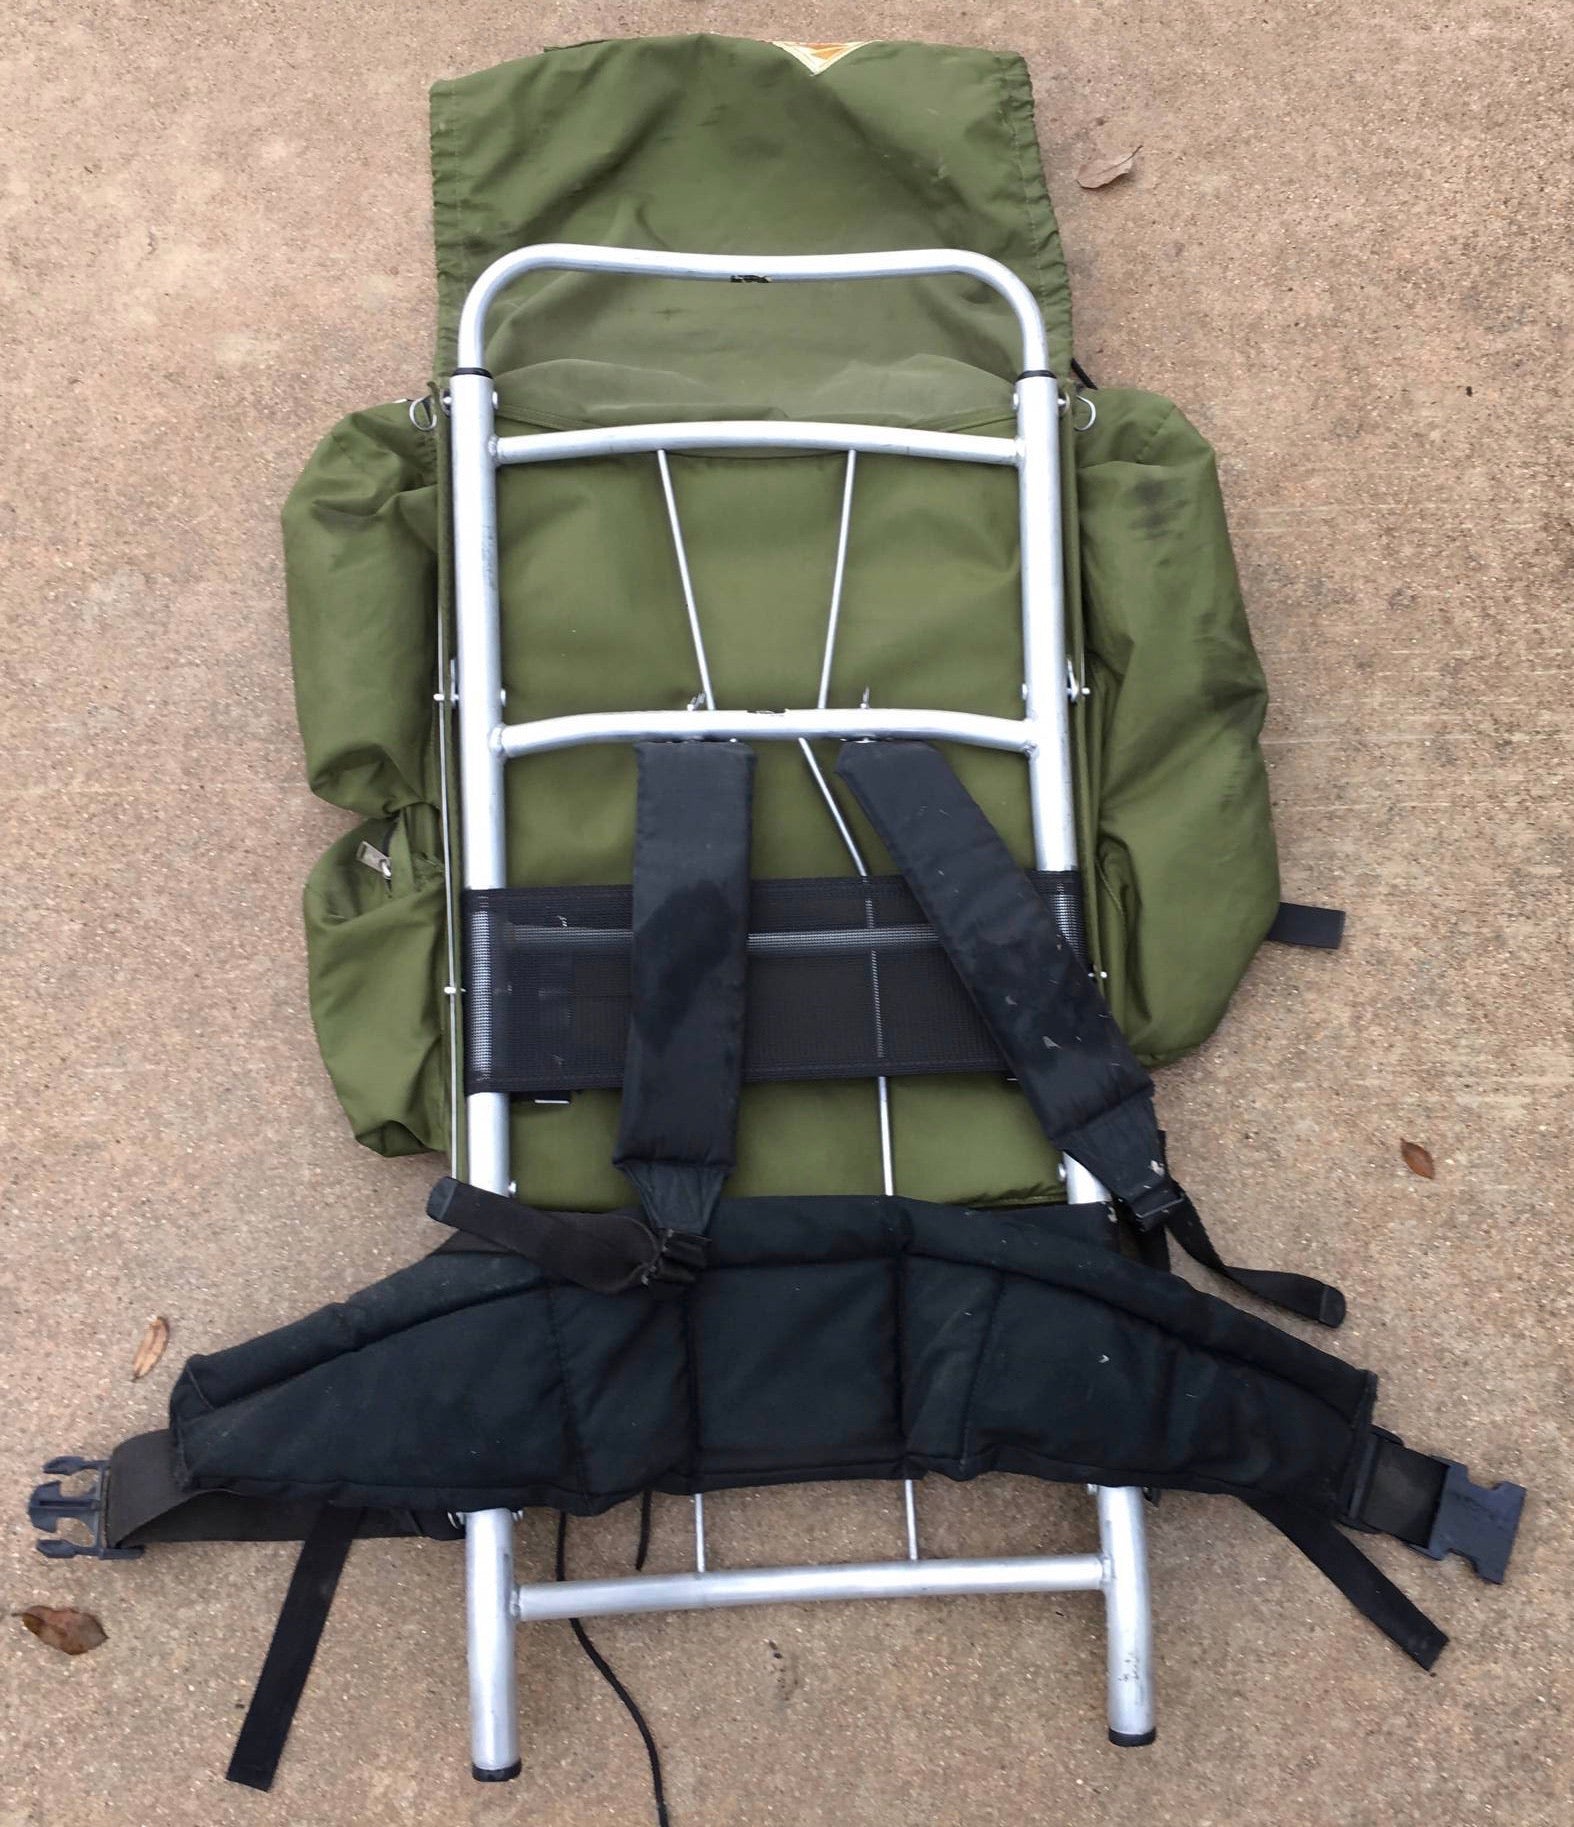 KELTY TREKKER 3950 backpack external frame hiking camping green NICE